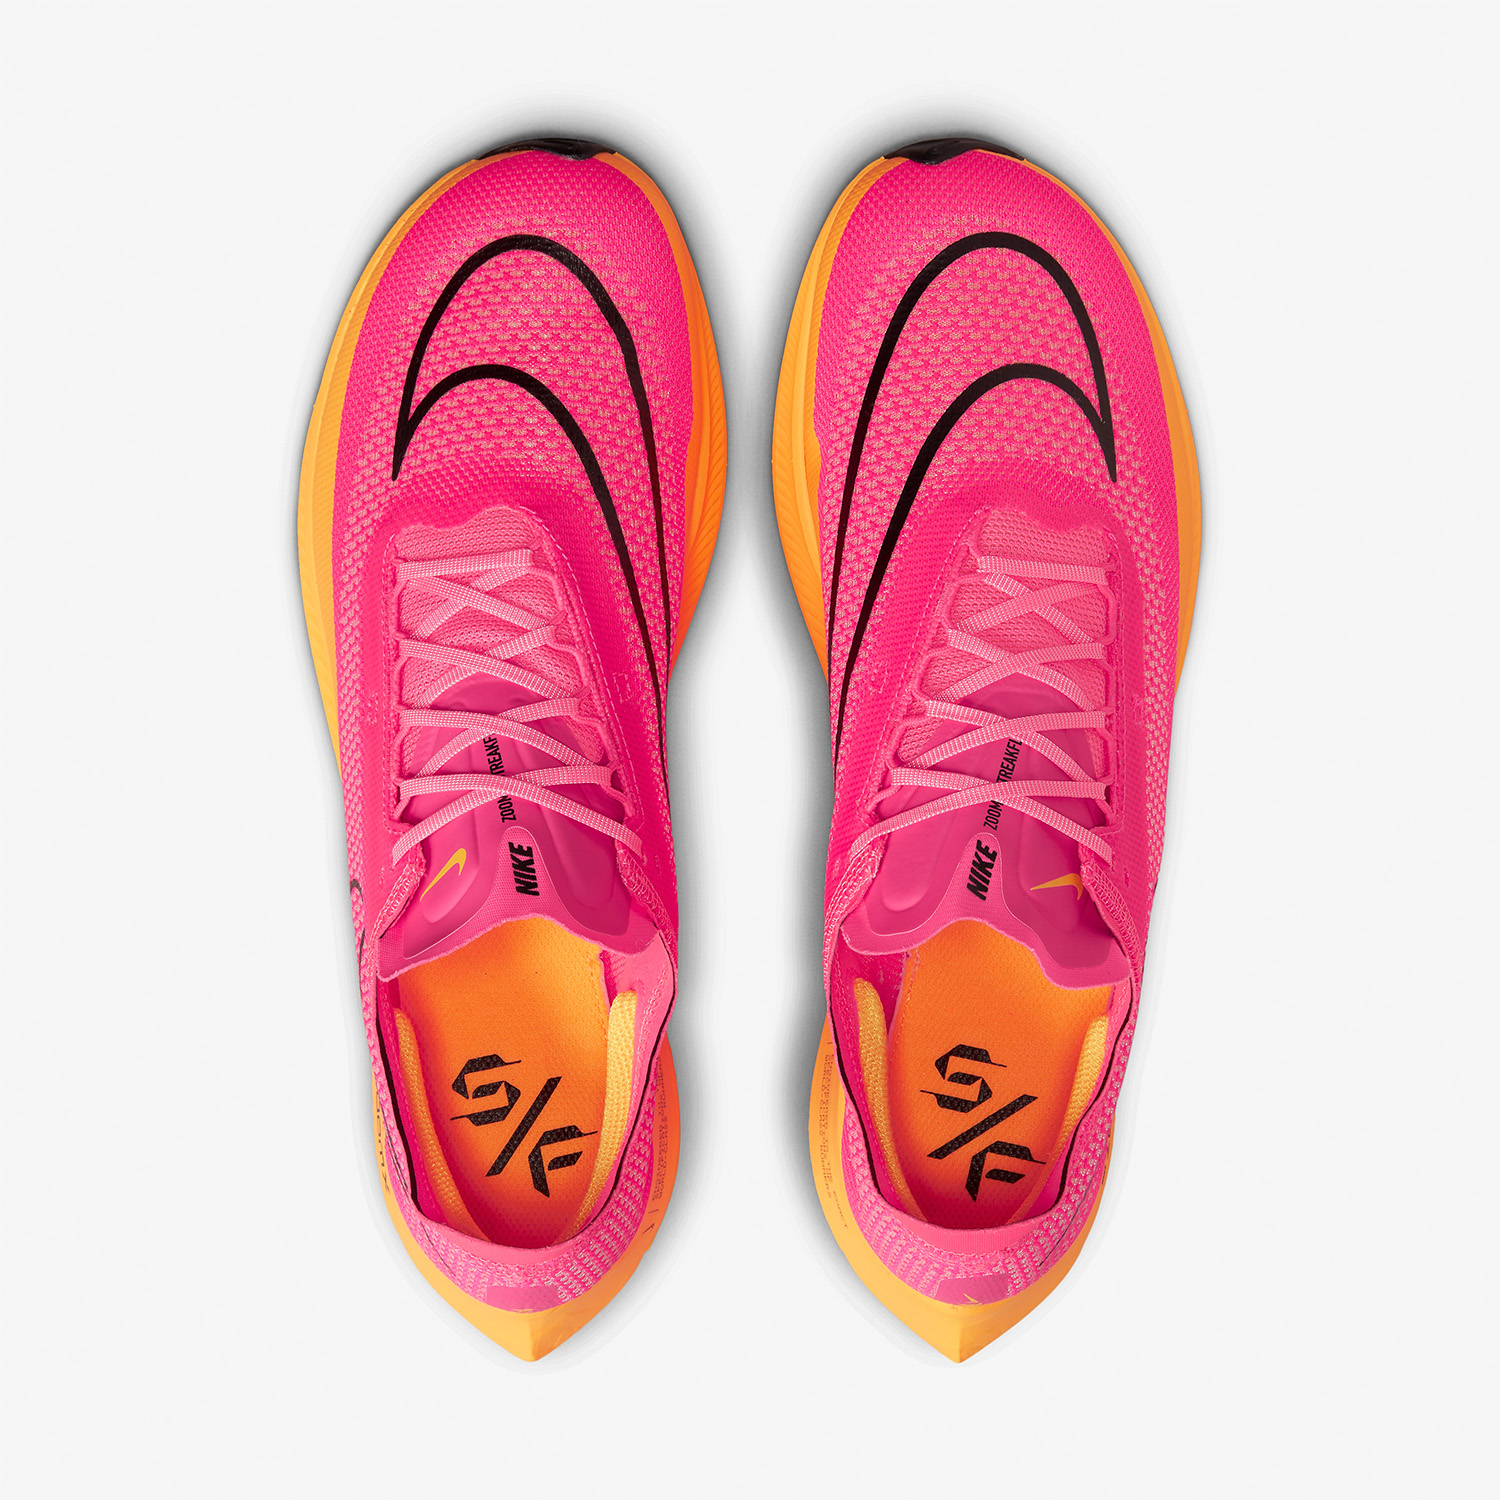 Nike ZoomX Streakfly - Hyper Pink/Black/Laser Orange